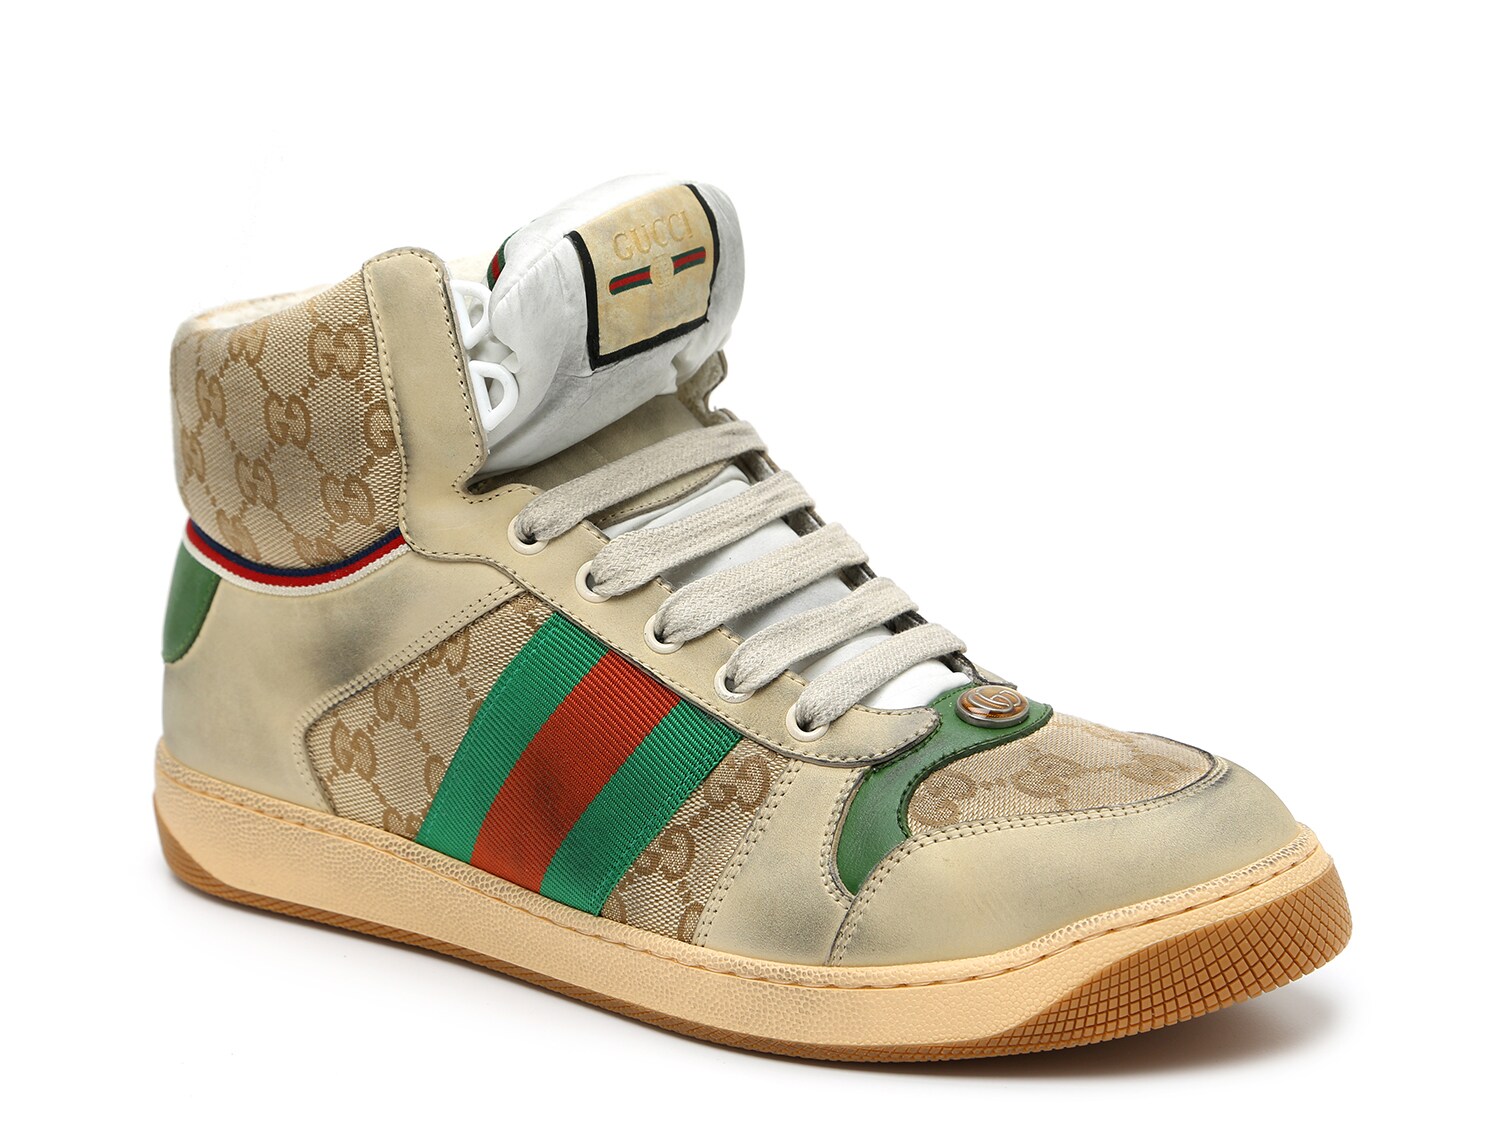 Gucci Men's Screener Signature Web Leather Low-Top Sneakers